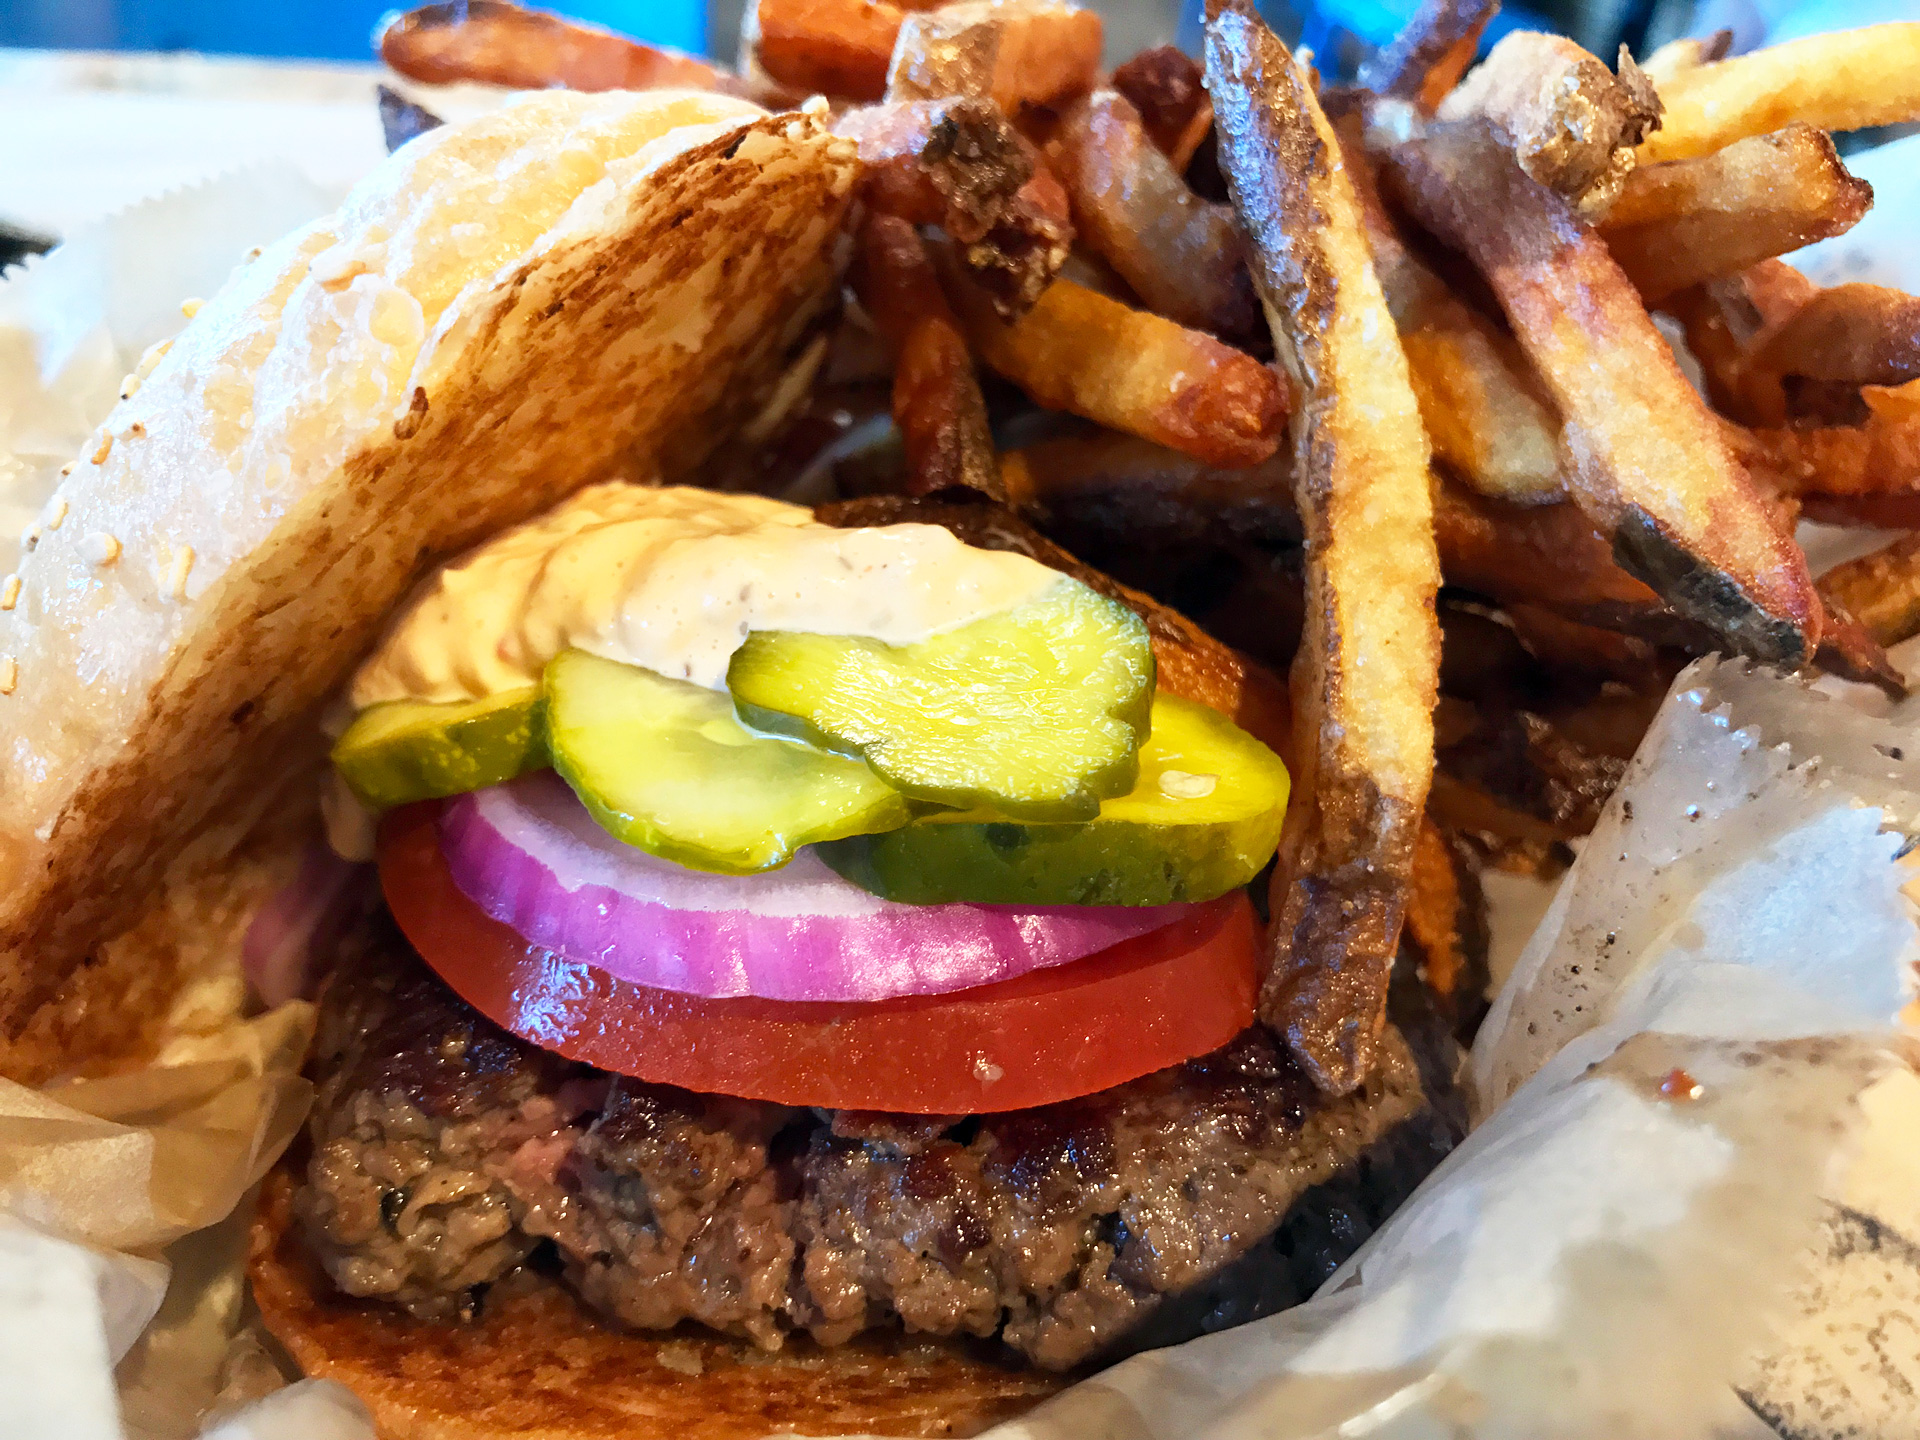 Farm Burger’s bargain burger at $8.50.